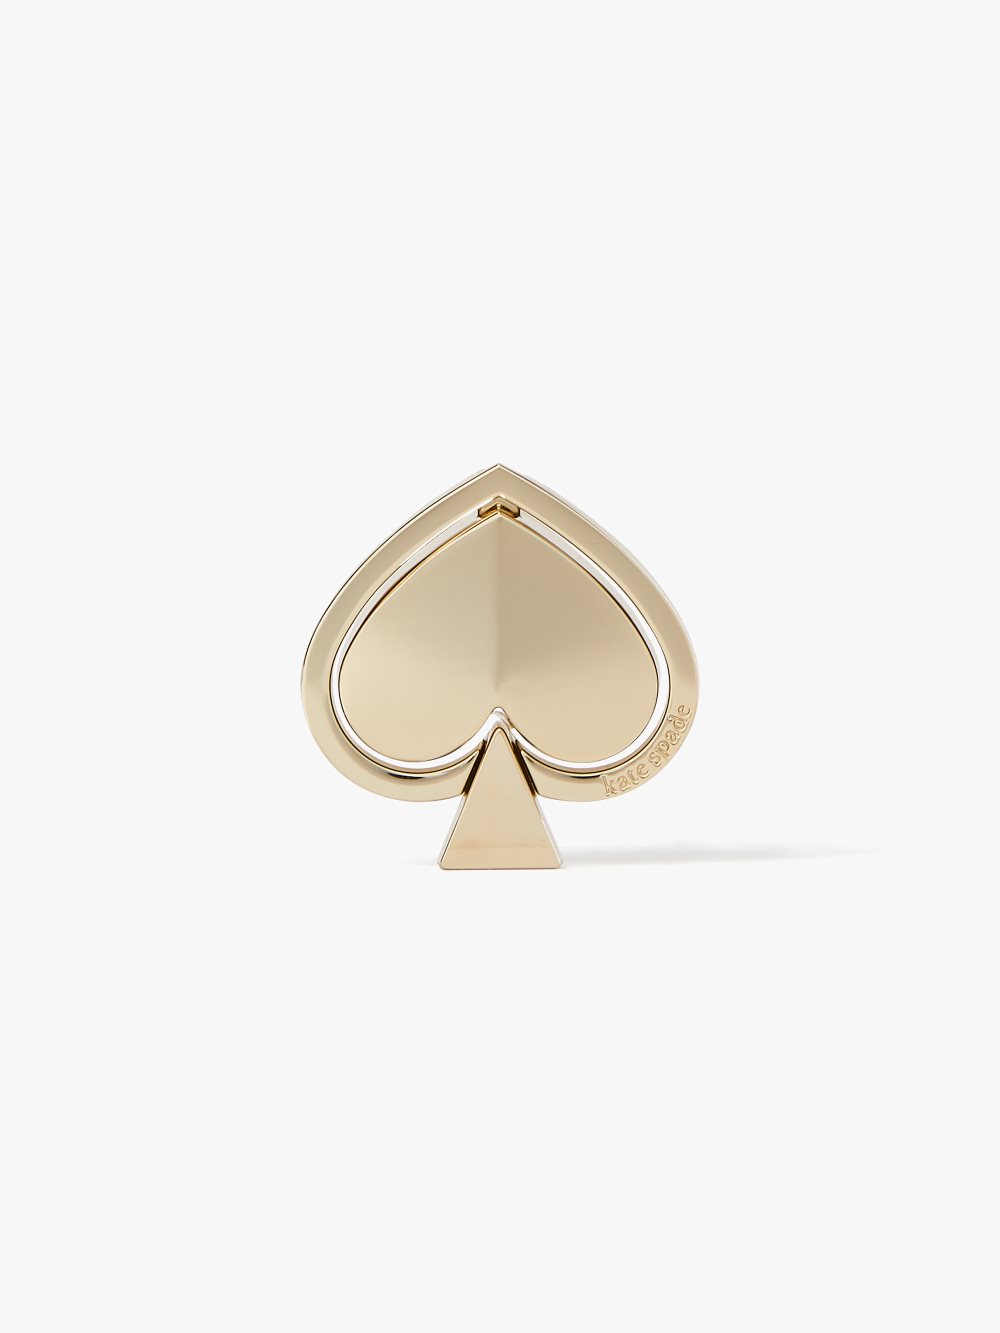 Women's gold spade heart ring stand | Kate Spade